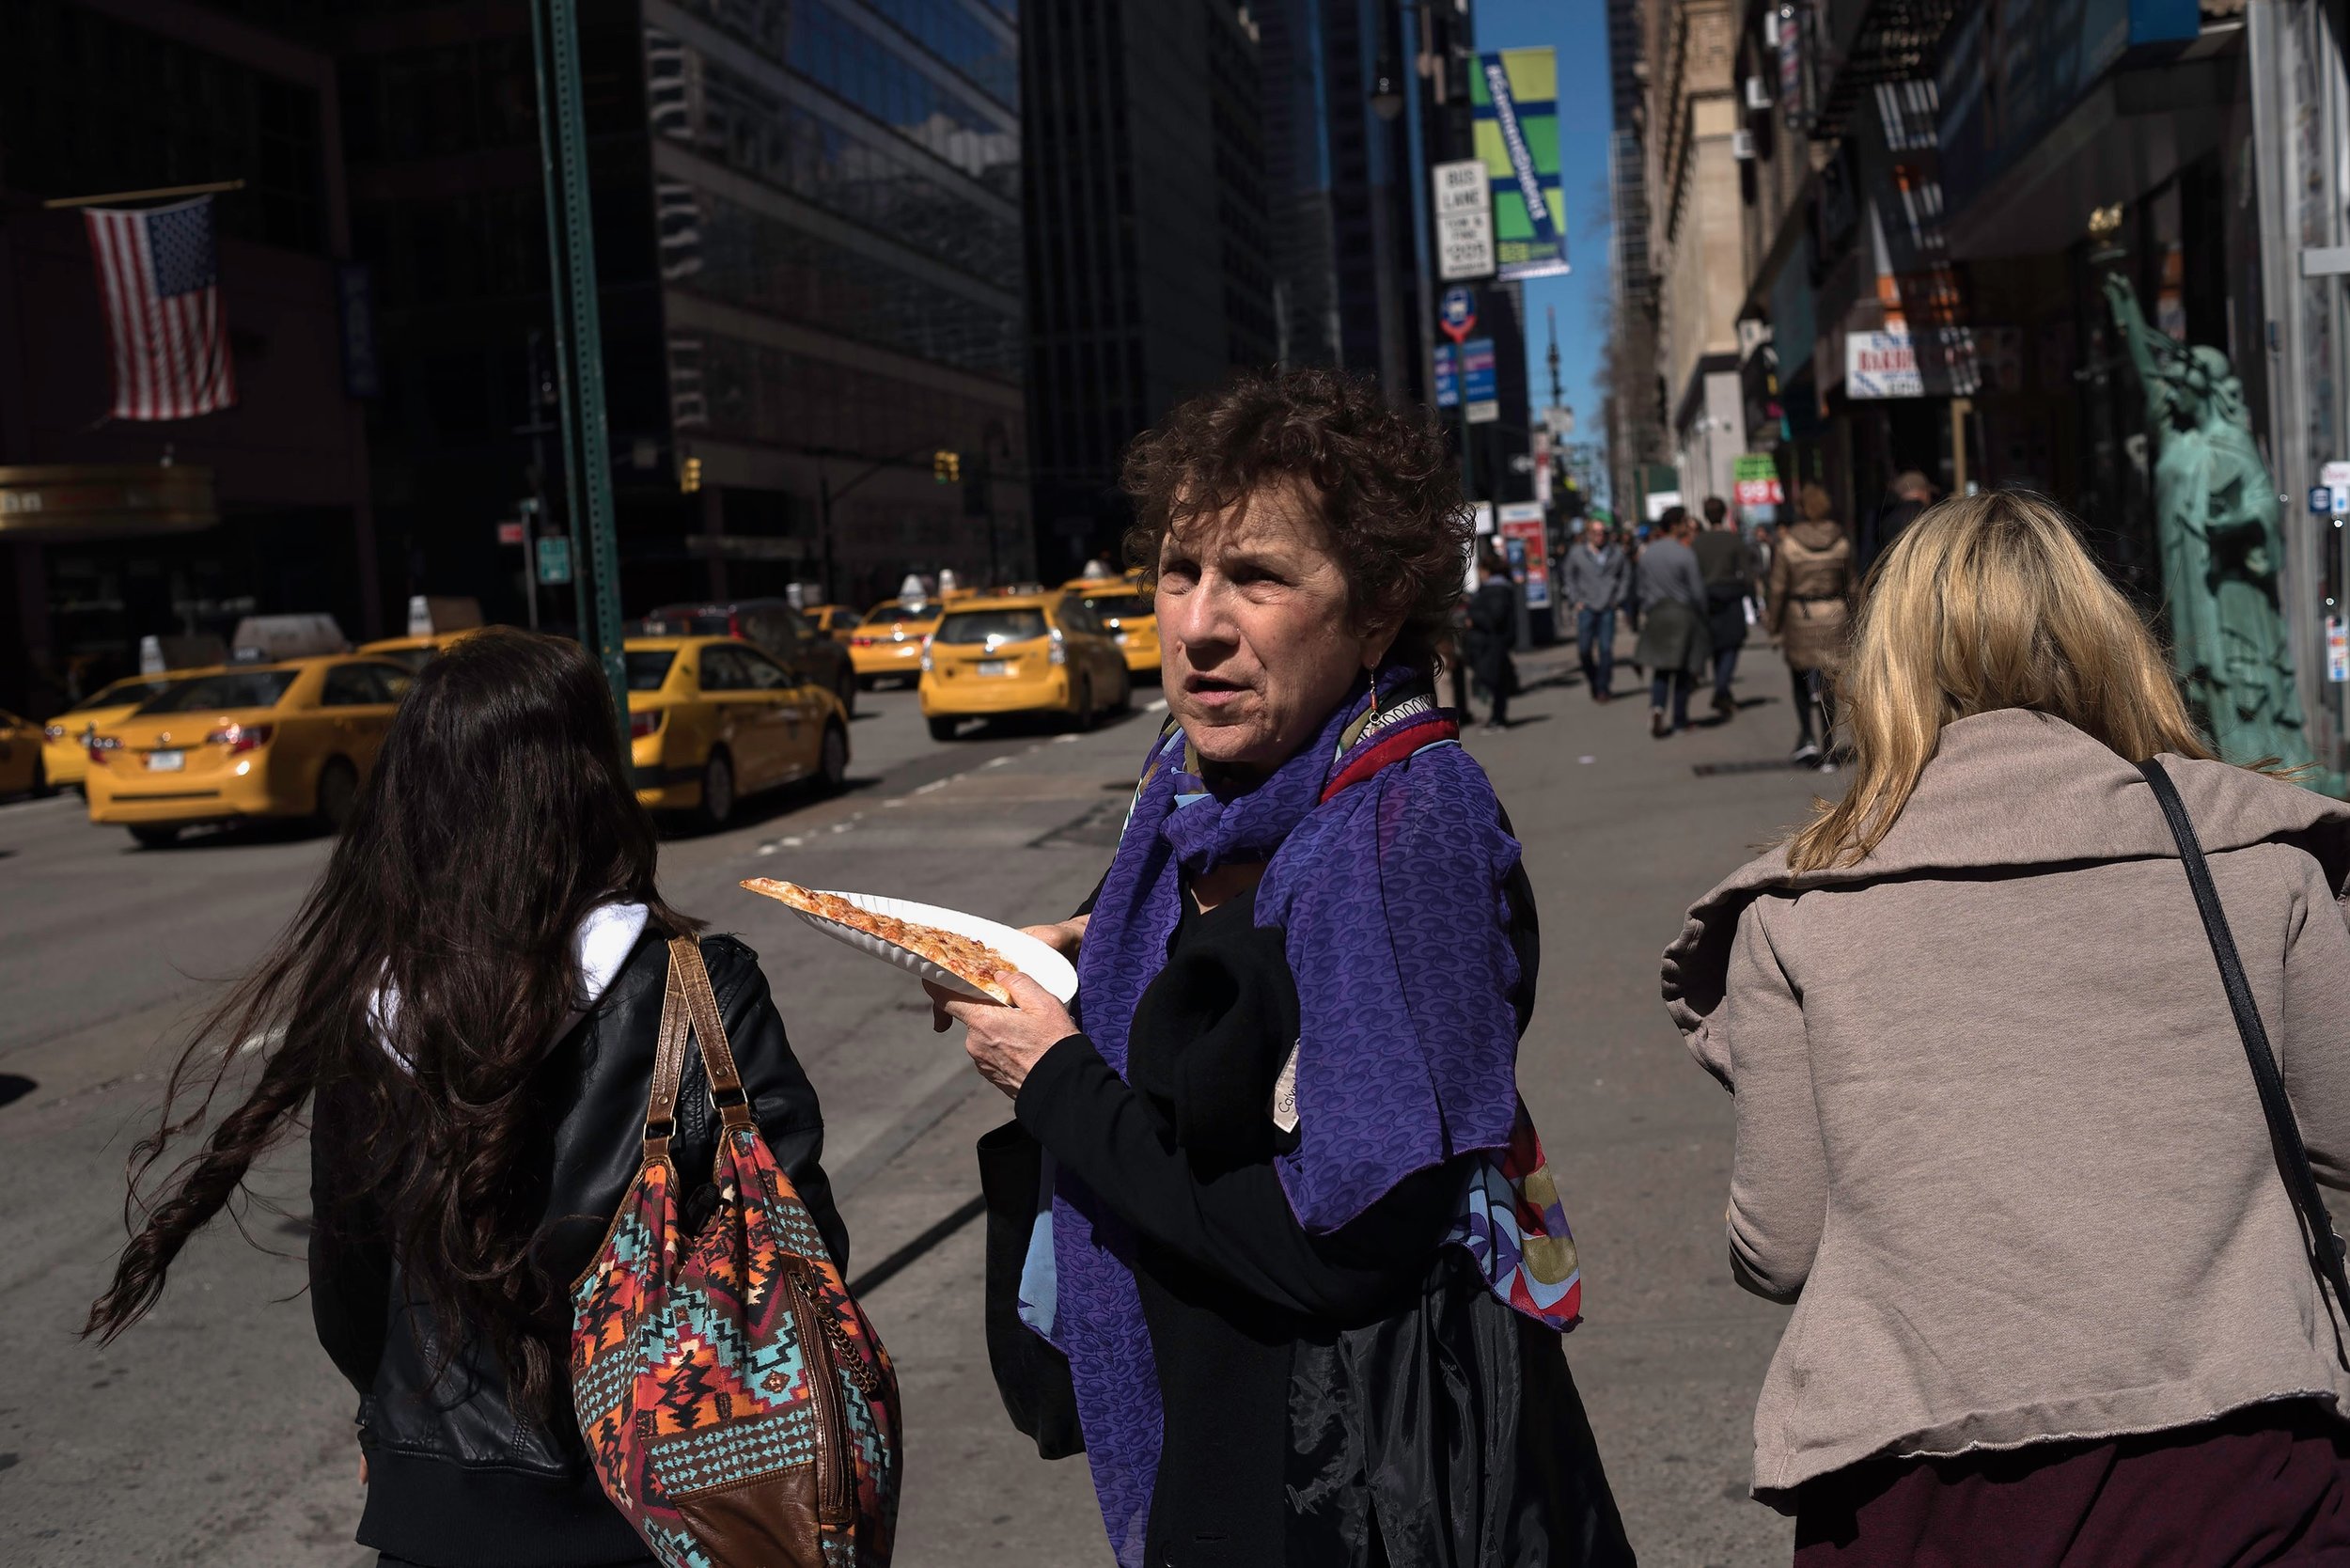 new-york-city-street-photography-collective-frank-multari-7